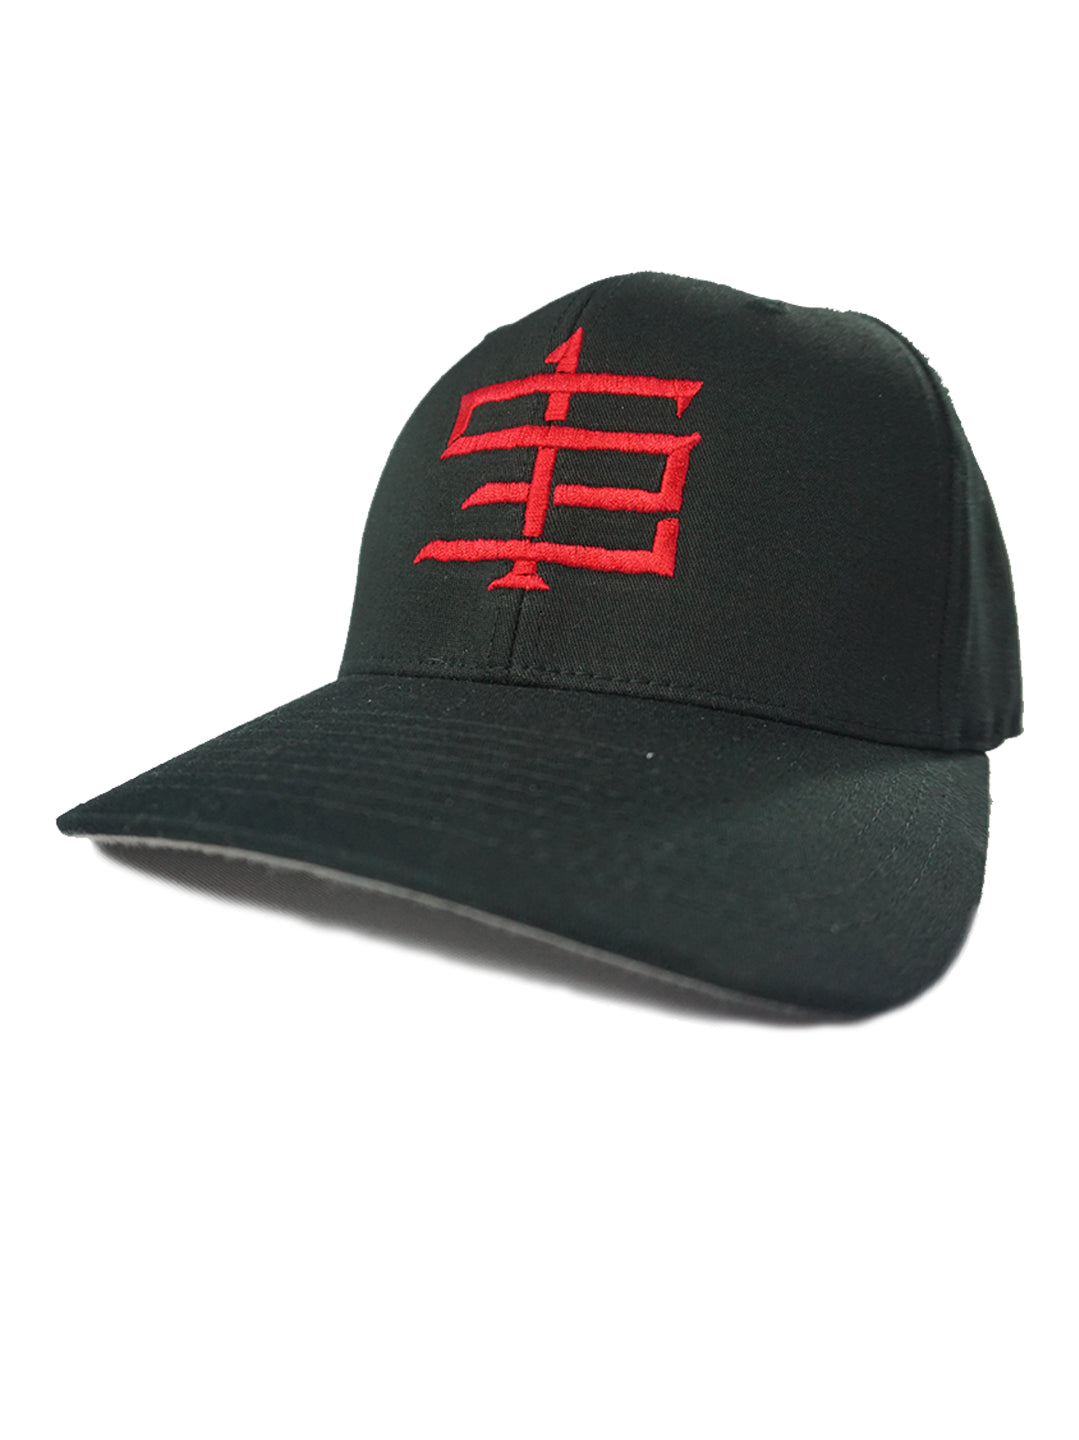 5/3/1 Monogram Hat - Black/Red